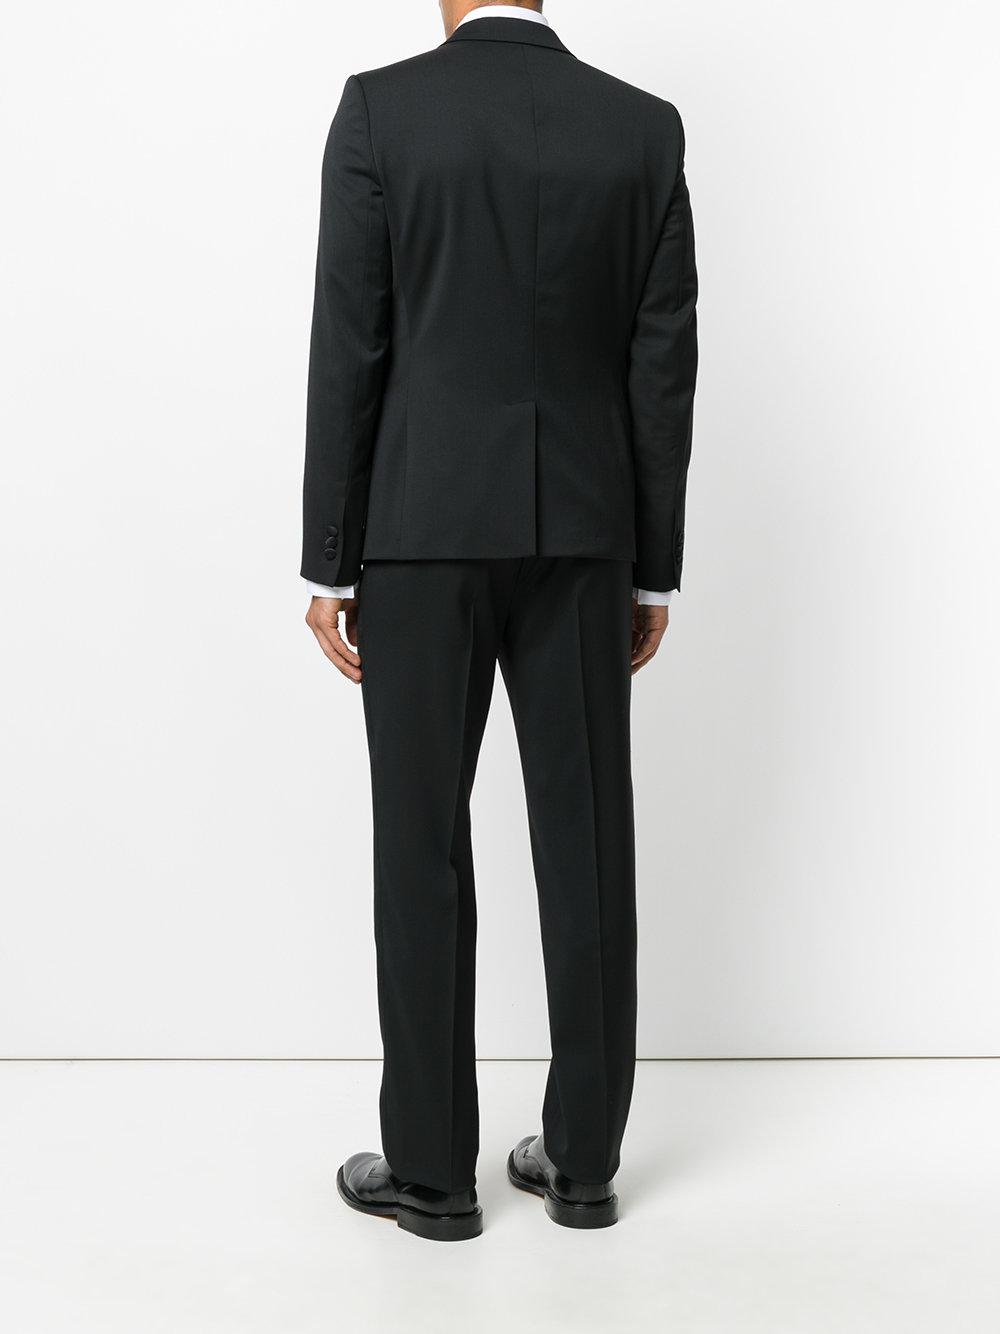 Emporio Armani Wool Tuxedo Suit in Black for Men - Lyst